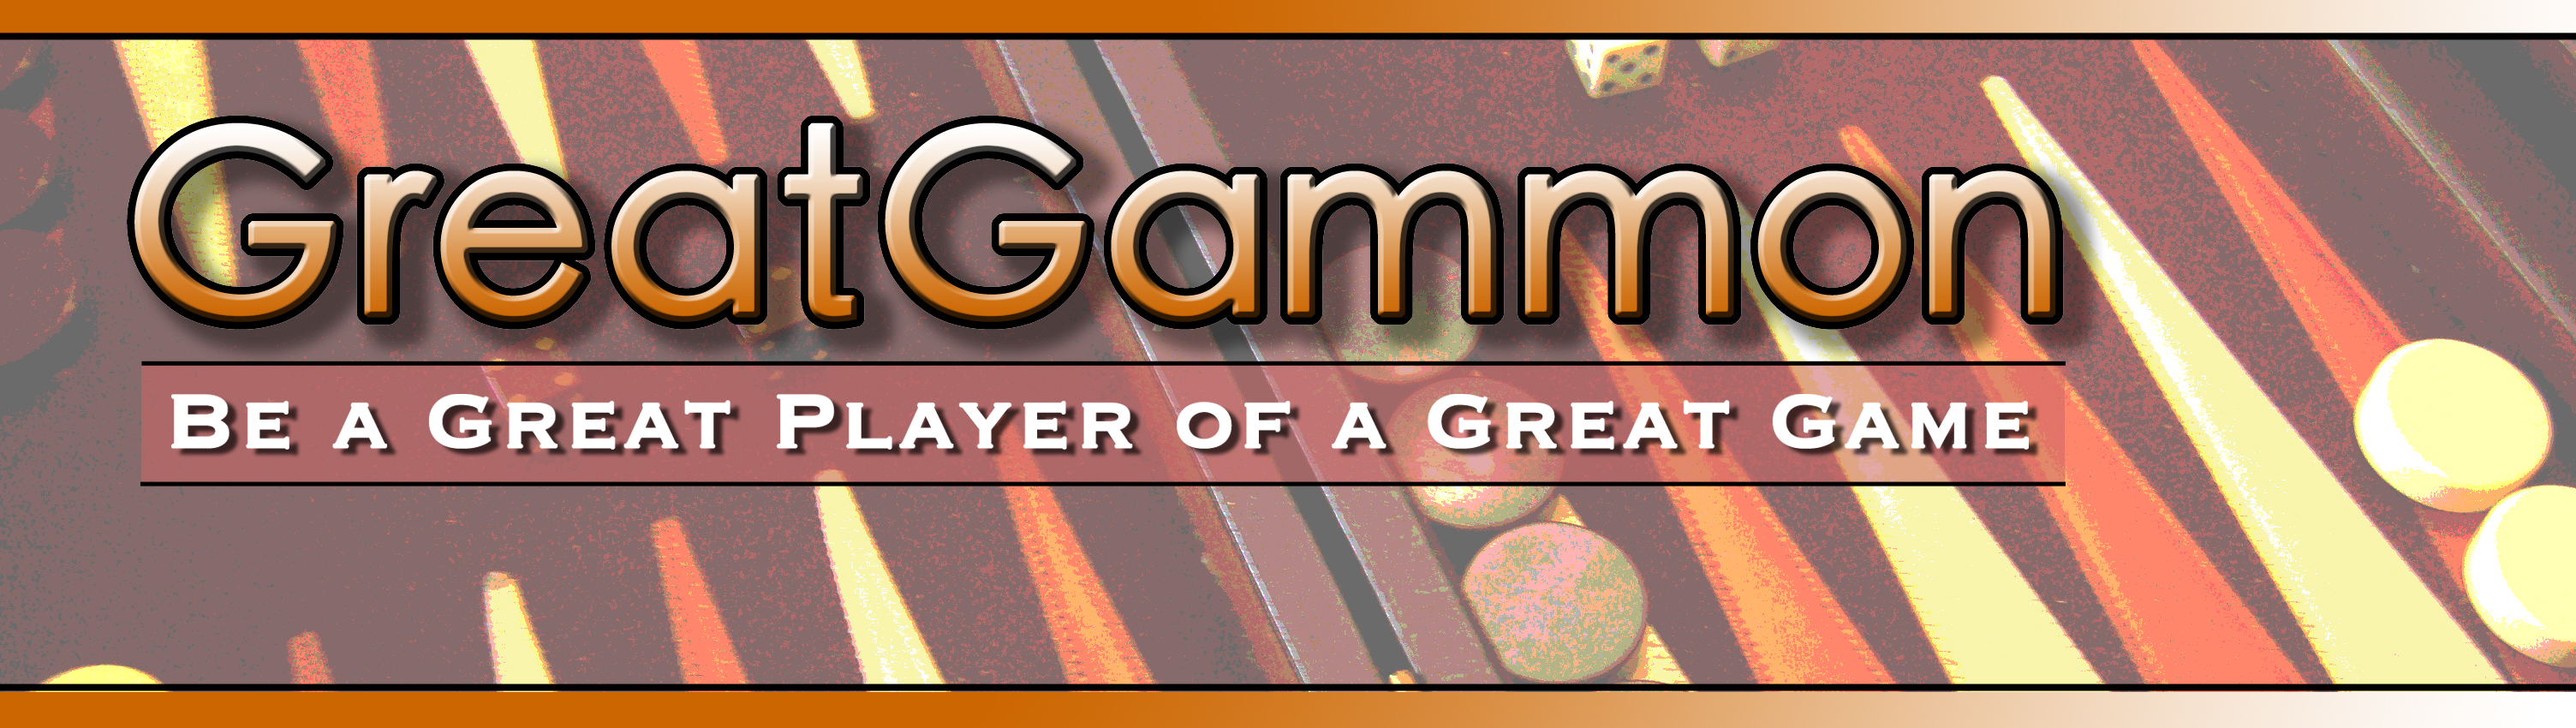 GreatGammon Banner